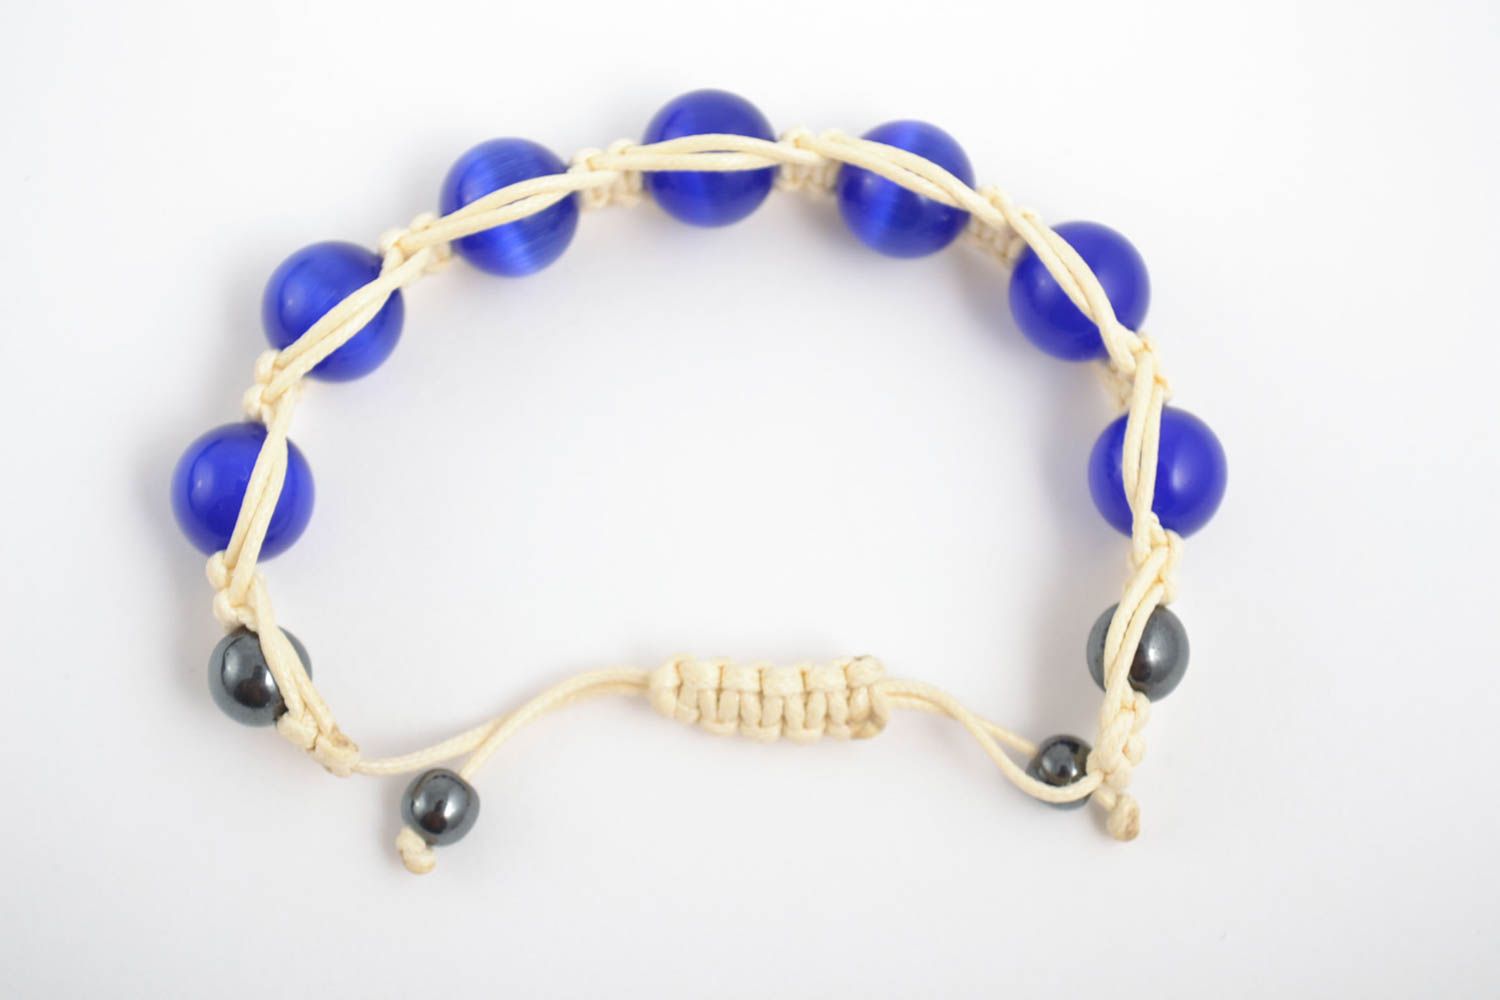 Stylish handmade wrist bracelet designs beaded gemstone bracelet gifts for her photo 2